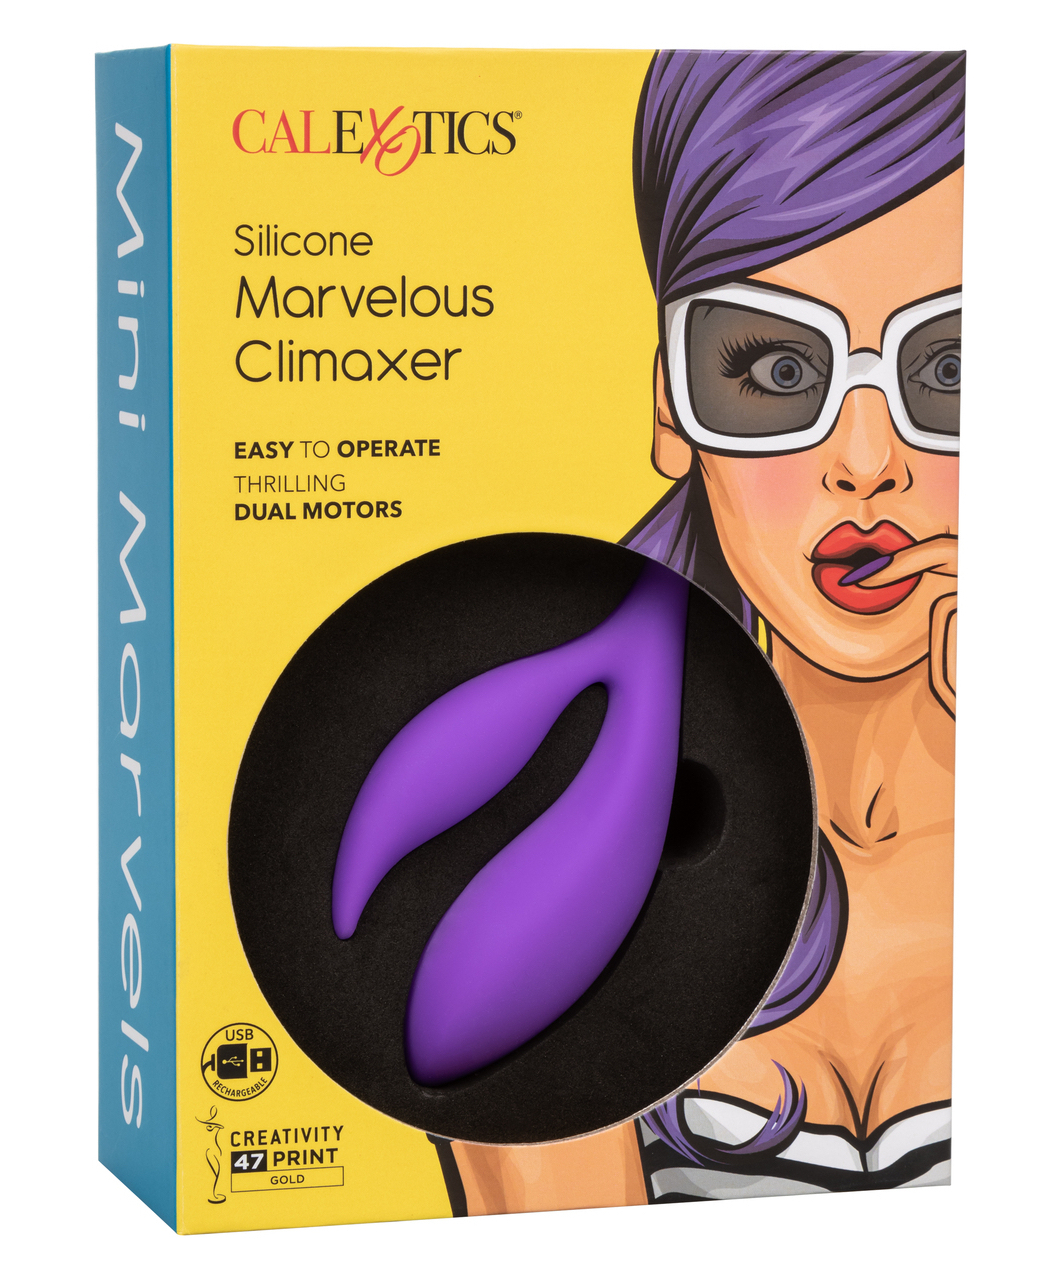 CalExotics Marvelous Climaxer vibraator